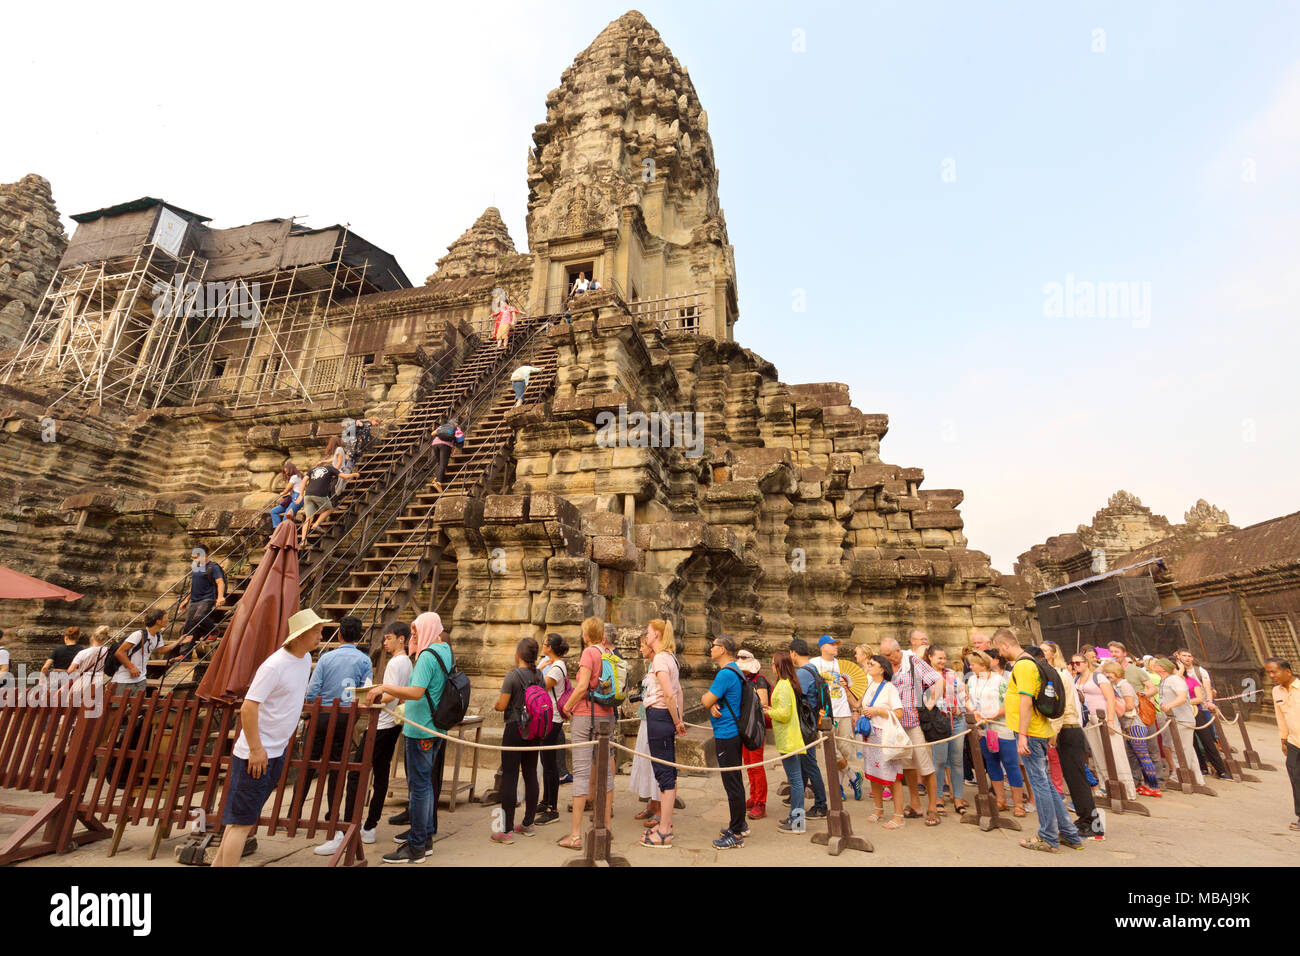 Tempel Angkor Wat Kambodscha - Touristen Schlange zu den oberen Stufen zu klettern, UNESCO-Weltkulturerbe Angkor, Kambodscha Asien Stockfoto